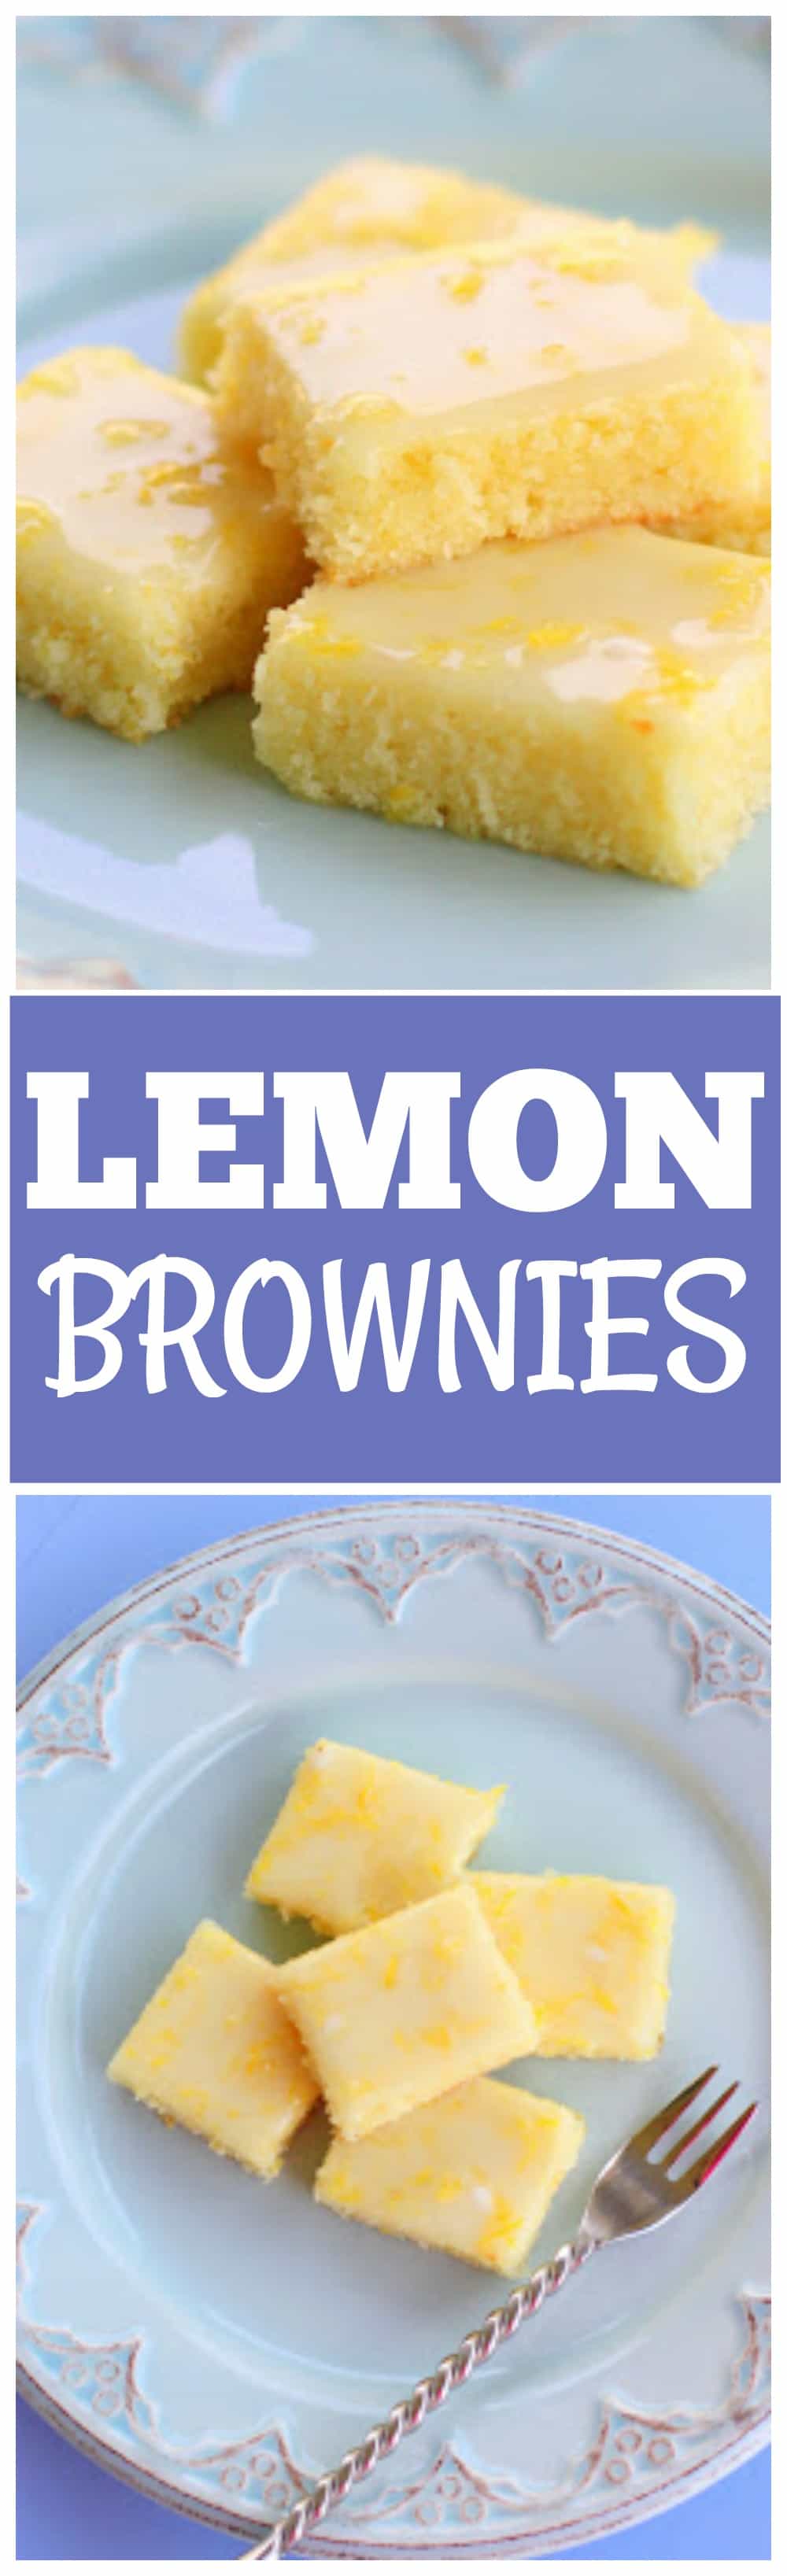 These Lemon Brownies are lemony, lemony, lemony. Topped with a lemon glaze and bursting with lemon flavor. #lemon #brownies #recipe #dessert #recipe